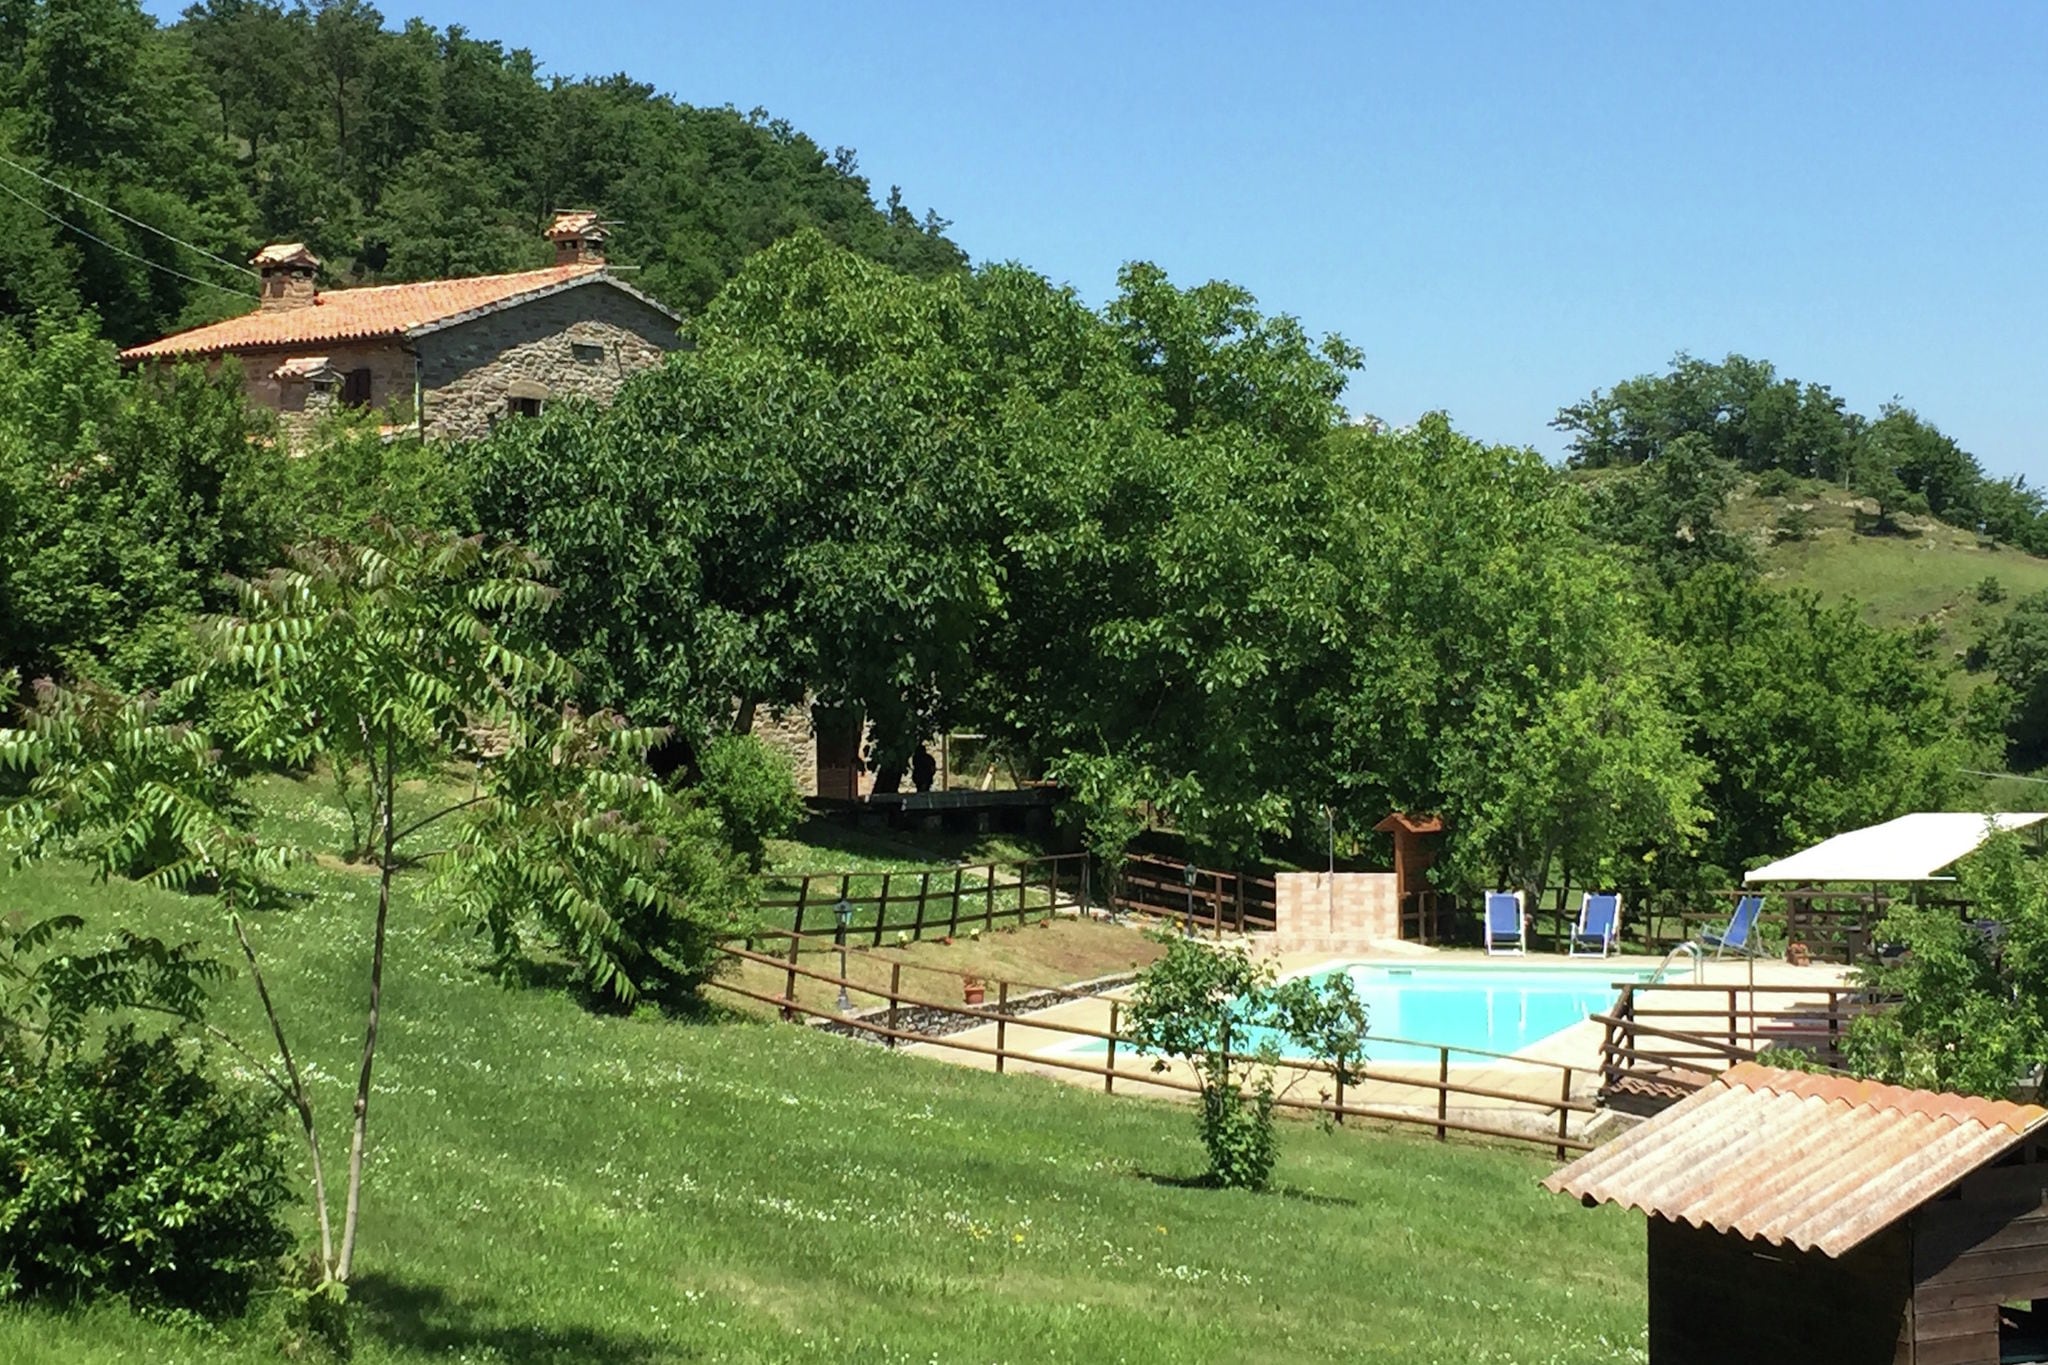 Mountain-view Farmhouse in Apecchio with Private Garden